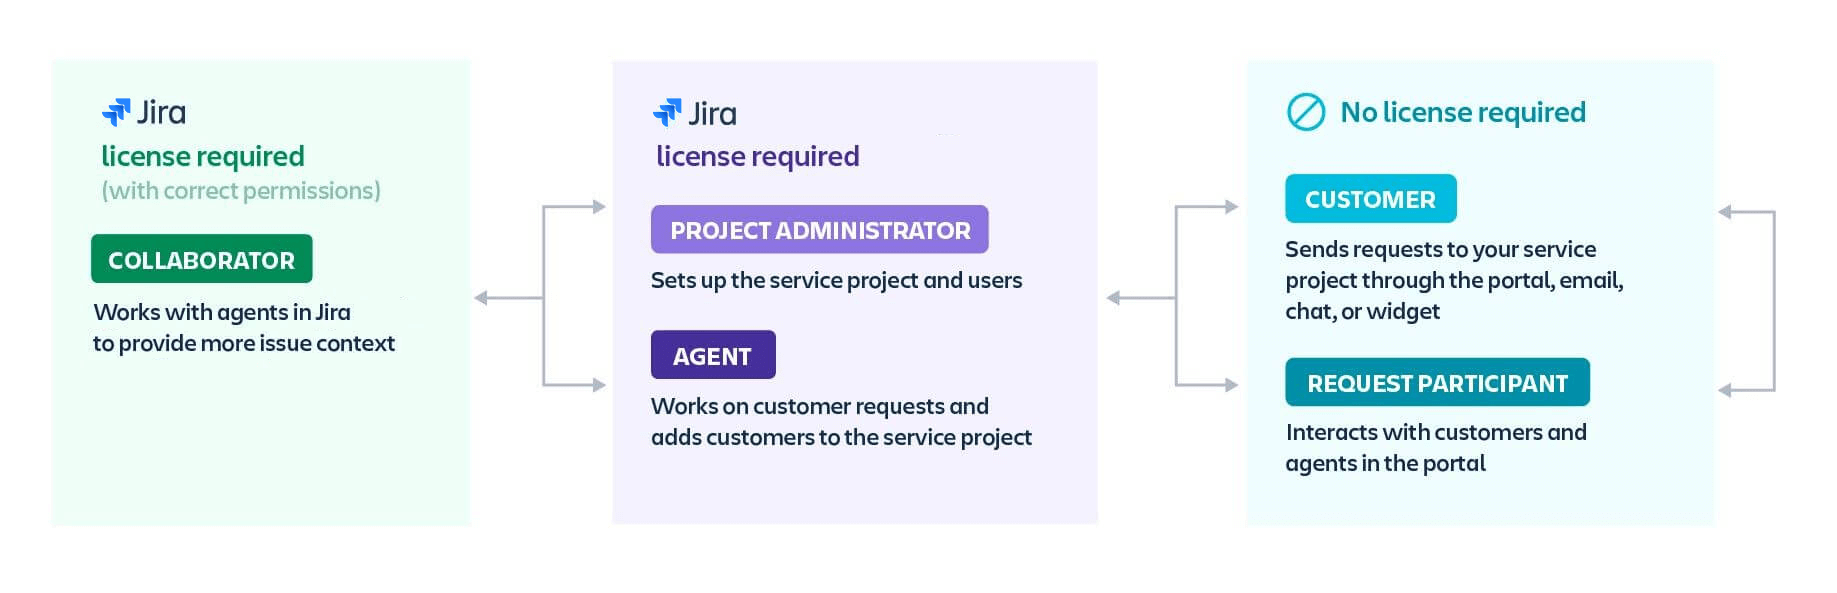 Jira Software と Jira Service Management 全体のユーザー タイプ: コラボレーター、プロジェクト管理者、エージェント、顧客、リクエスト参加者